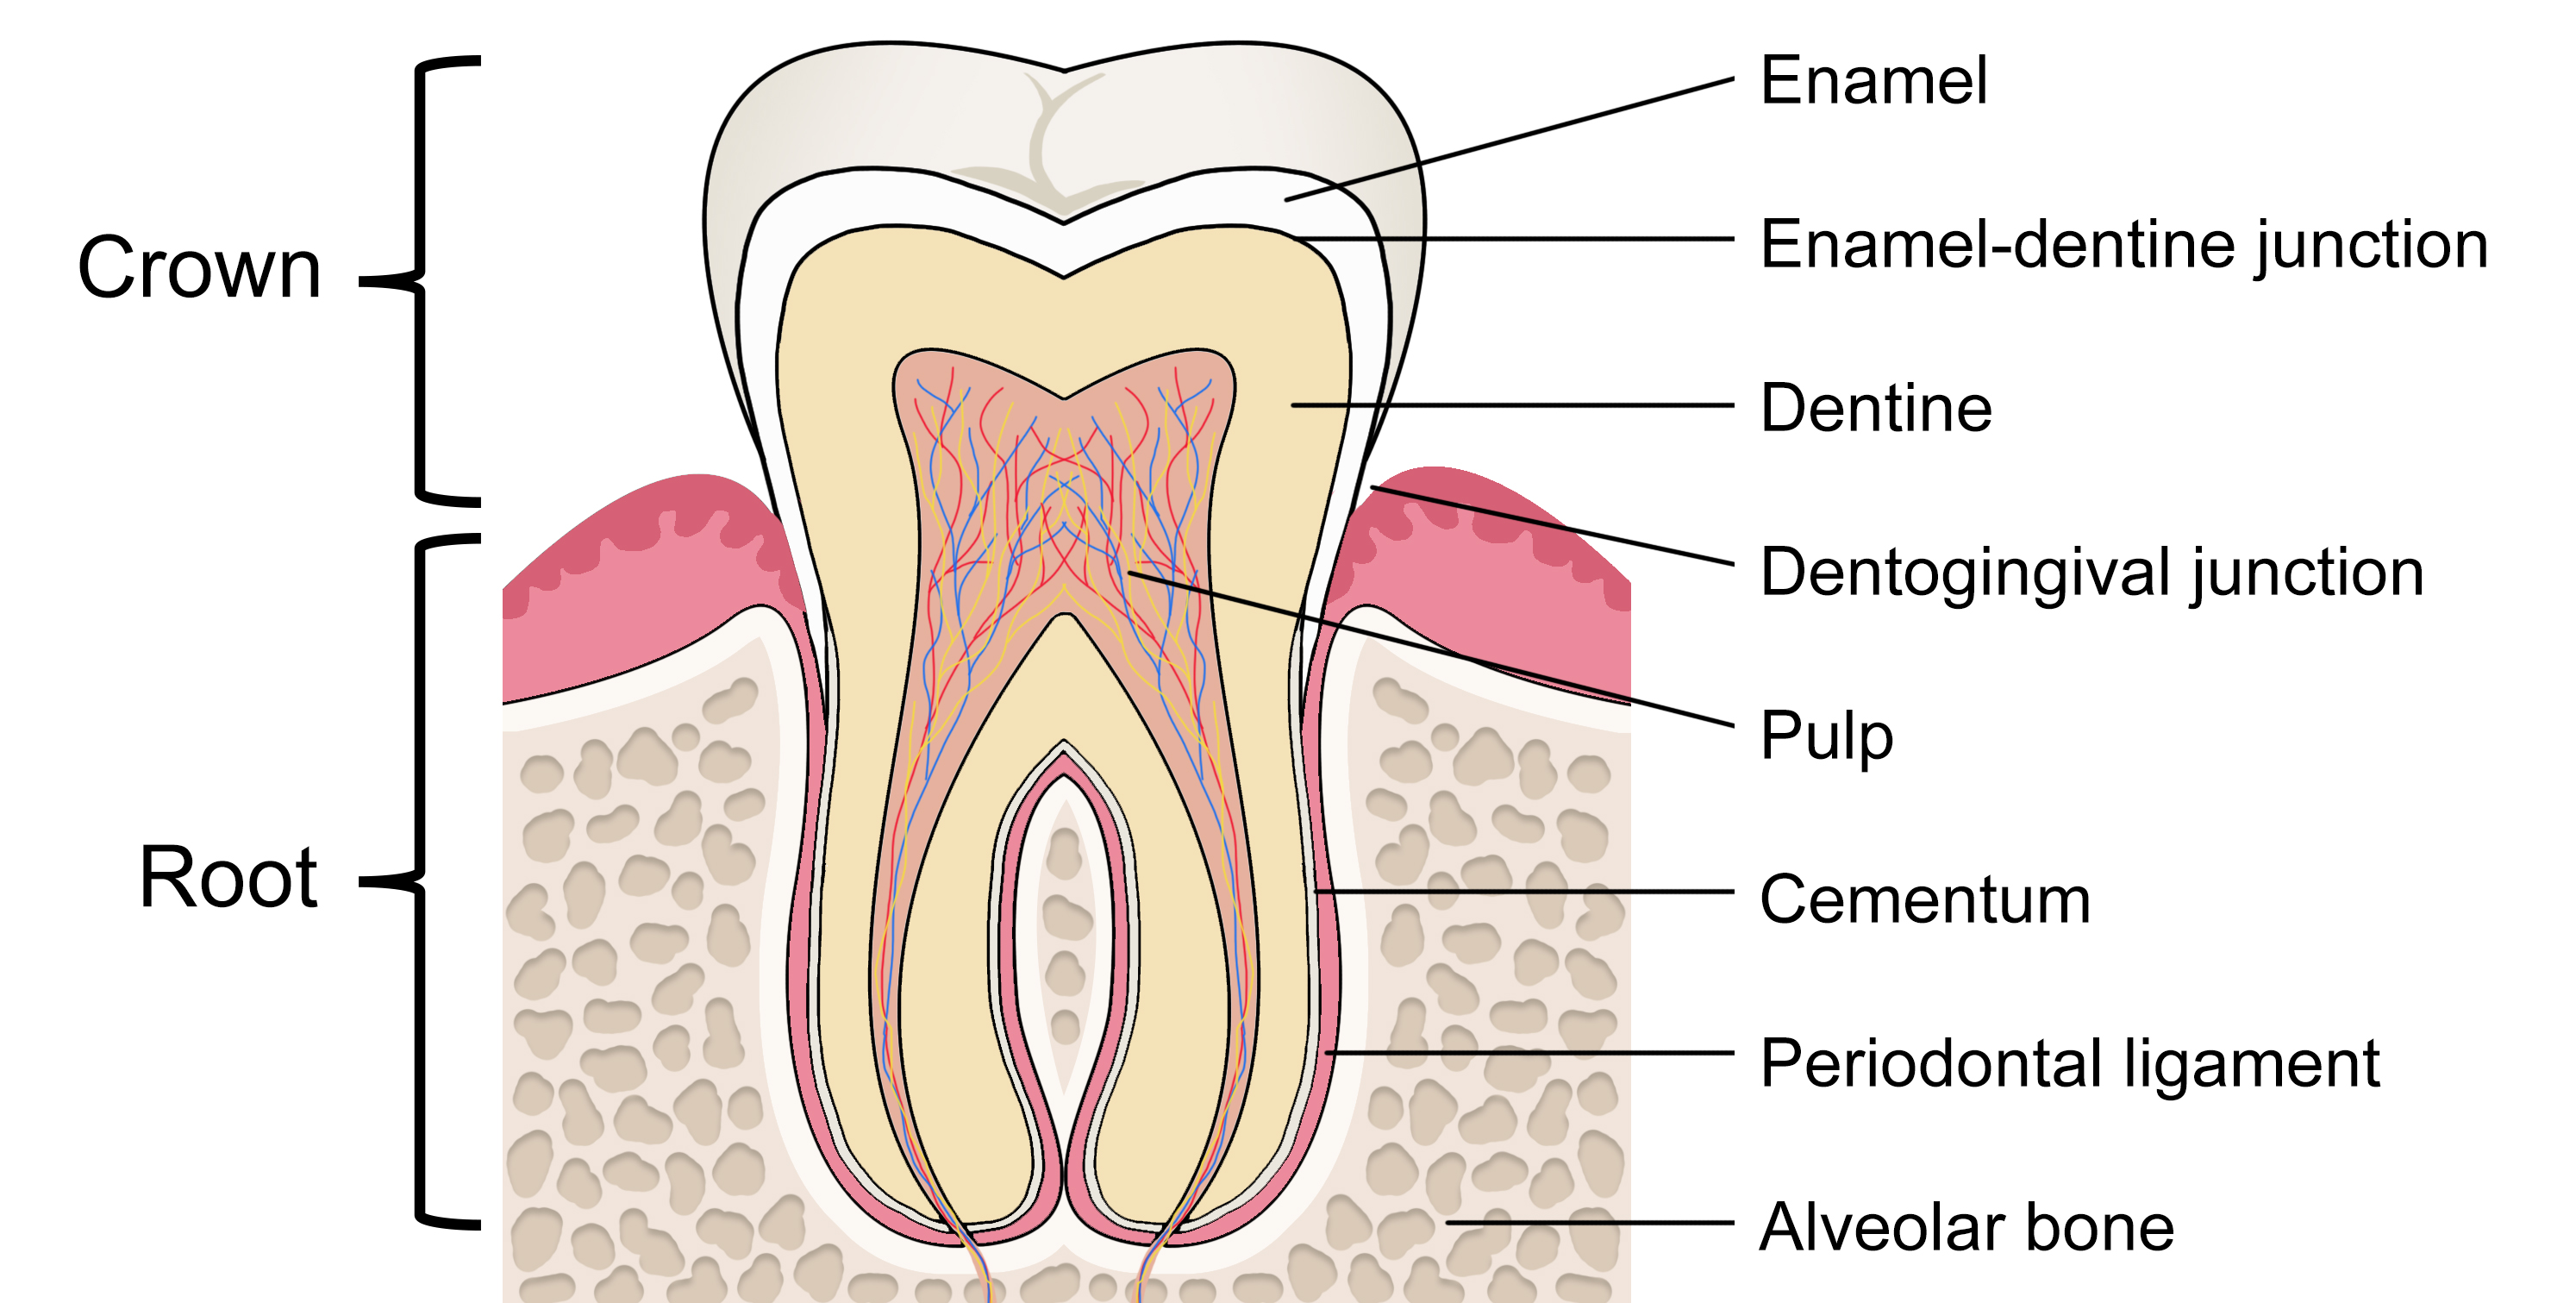 A cross-section of a permanent mandibular molar tooth within the alveolar bone